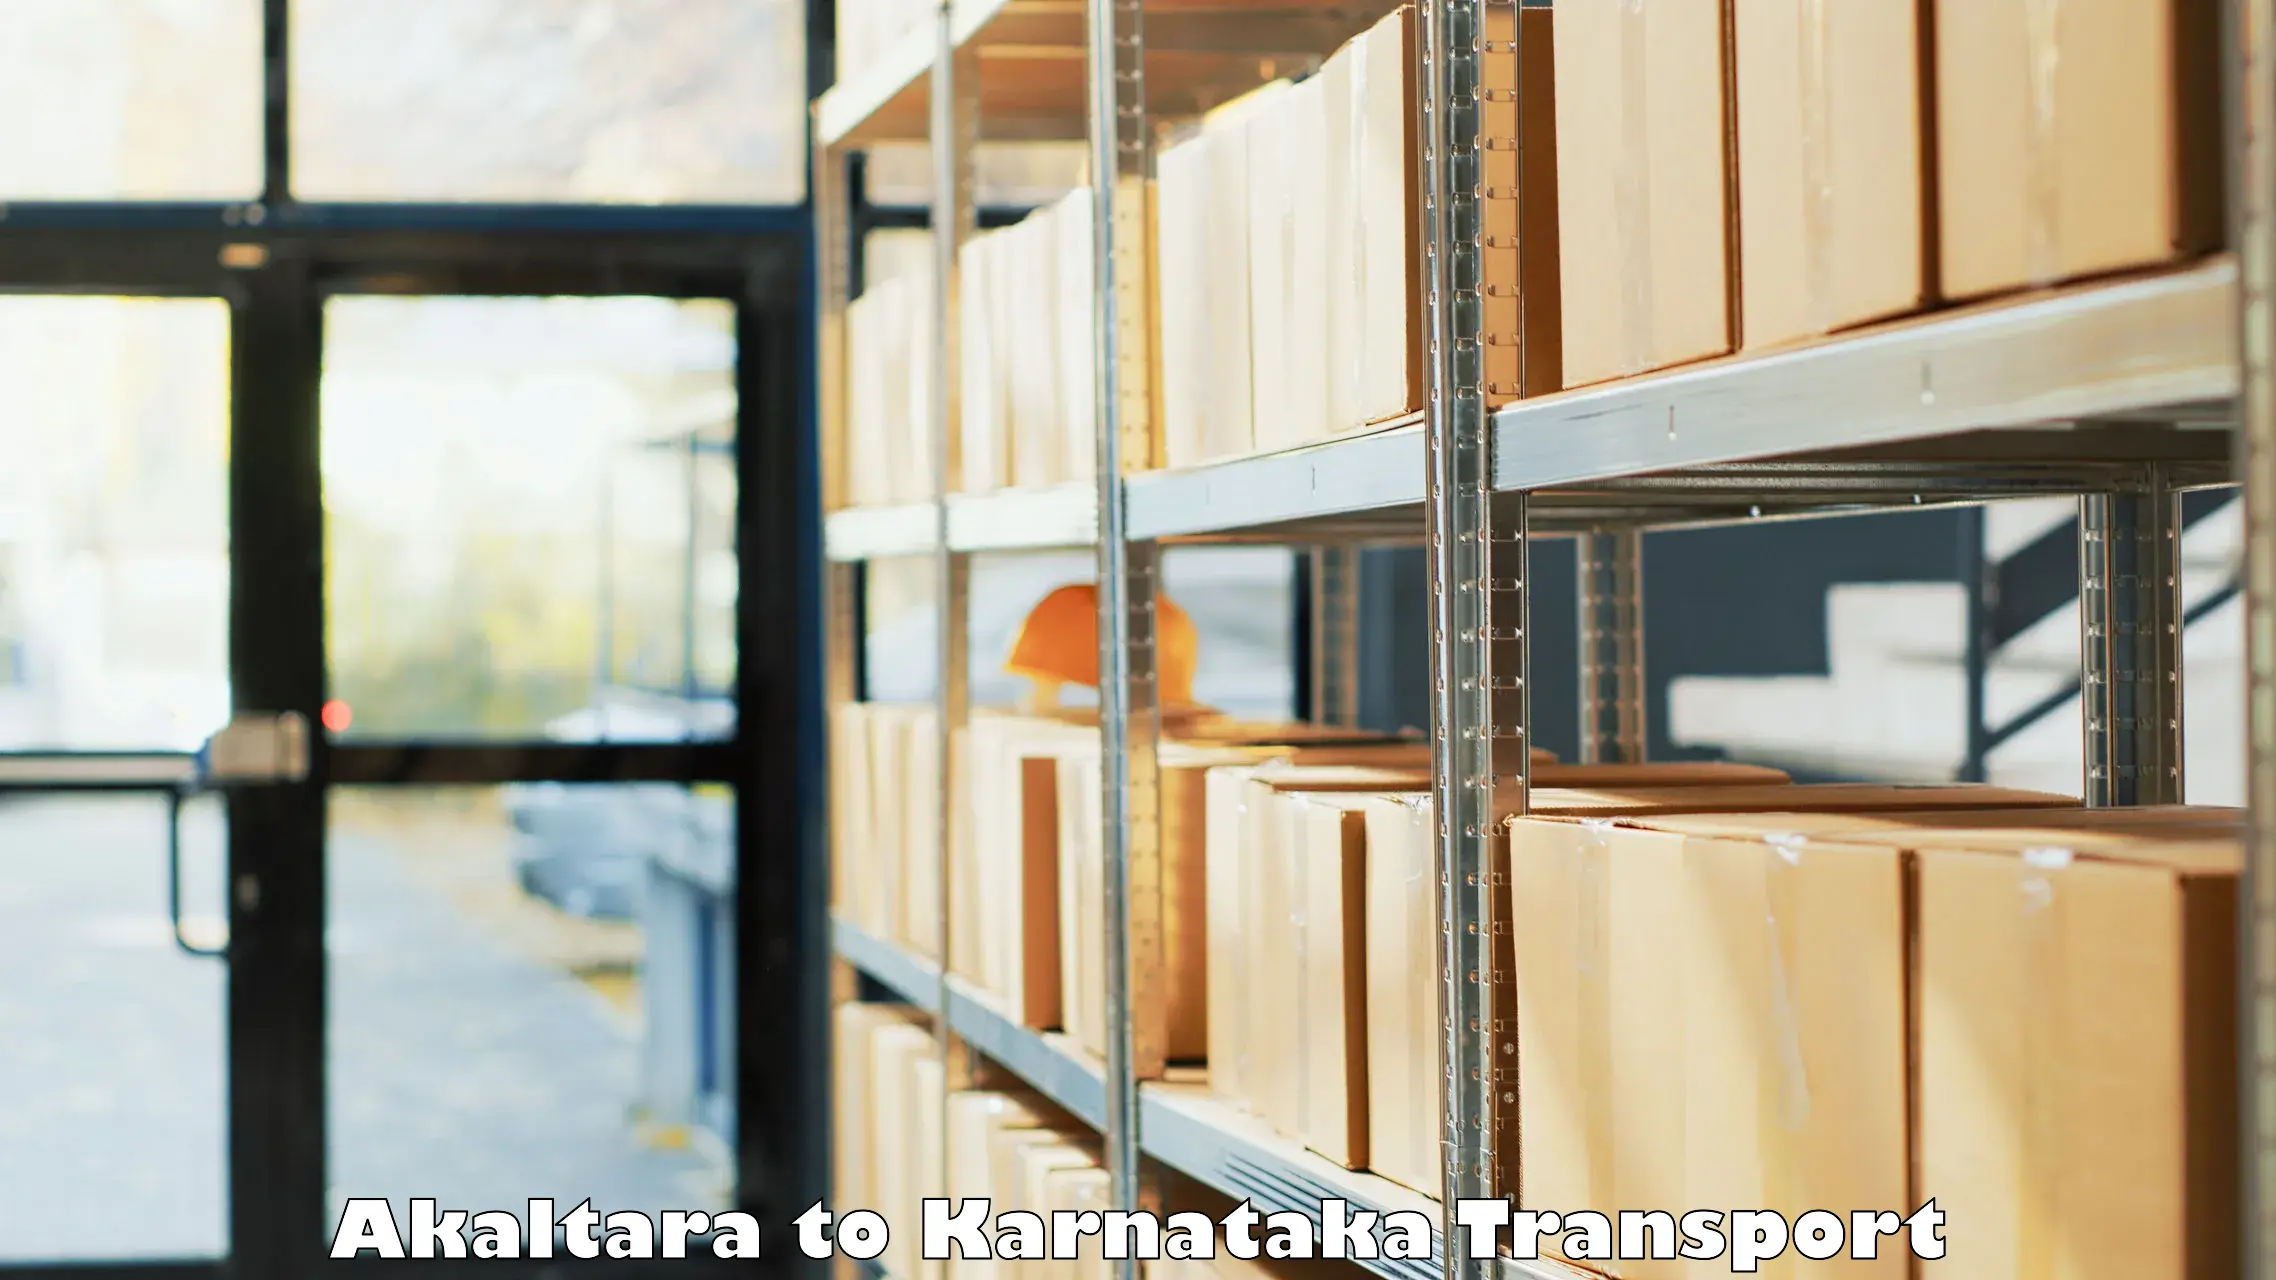 Truck transport companies in India Akaltara to Kittur